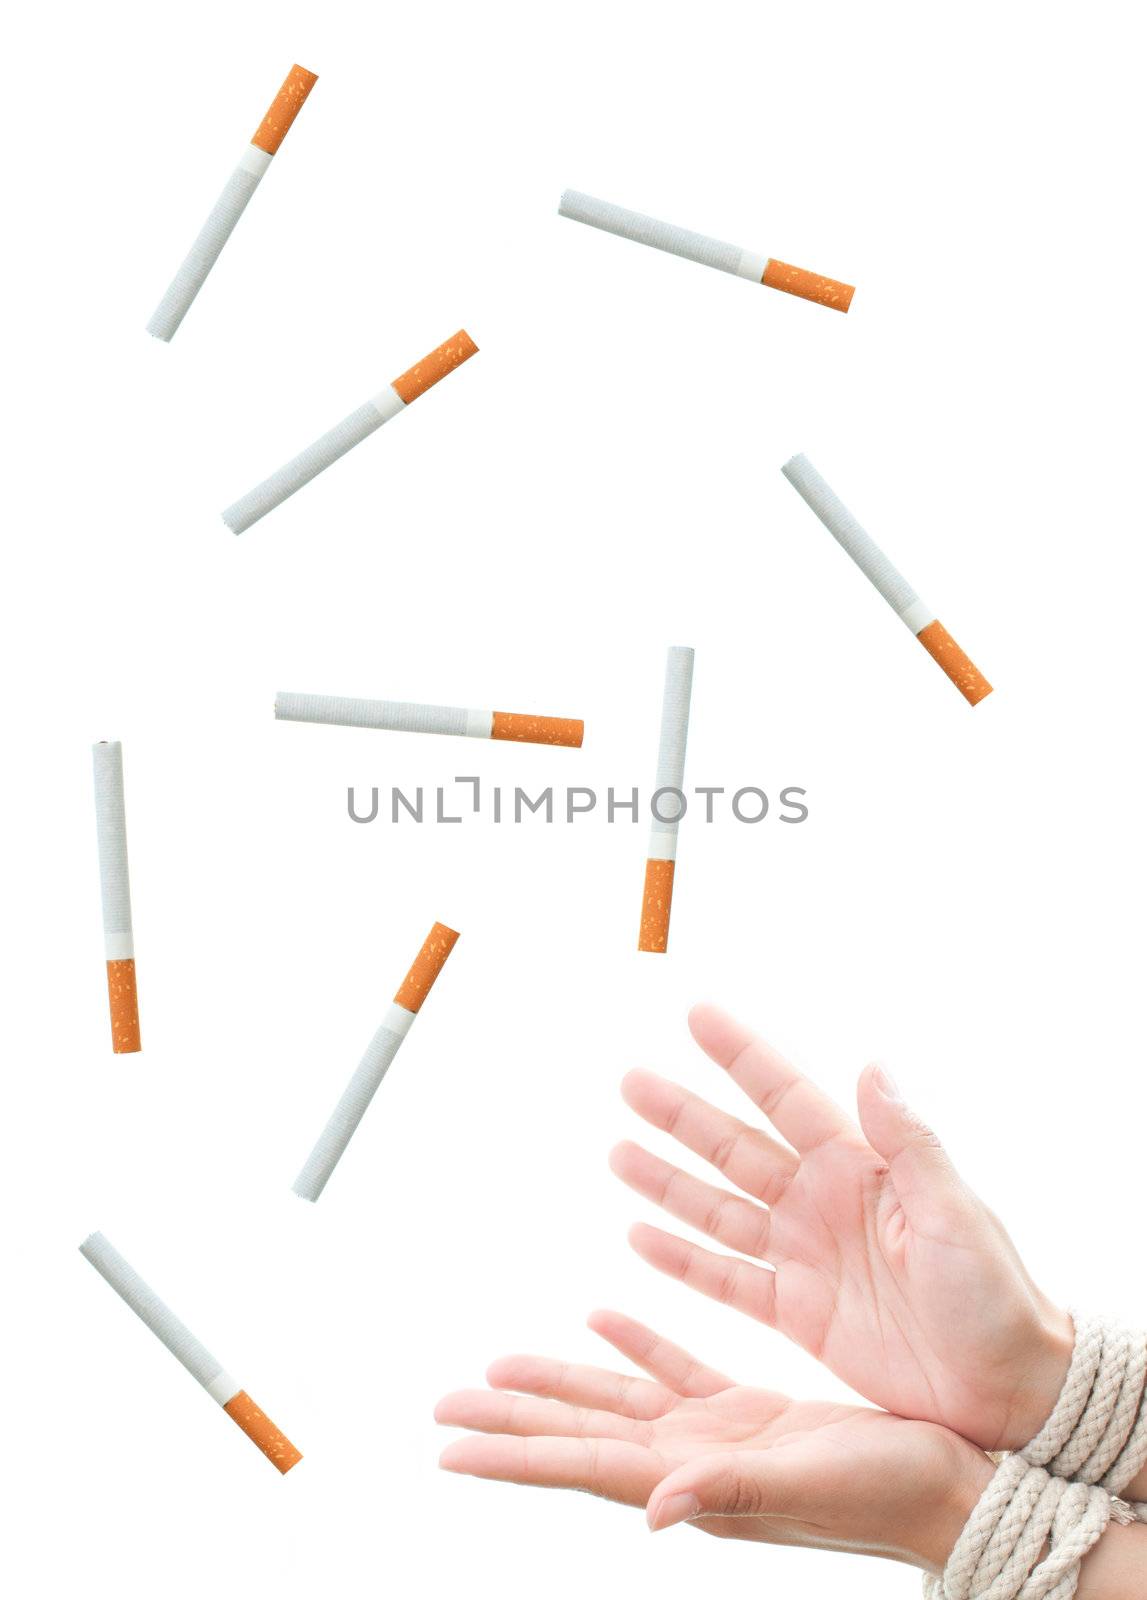 Quit smoking by unikpix